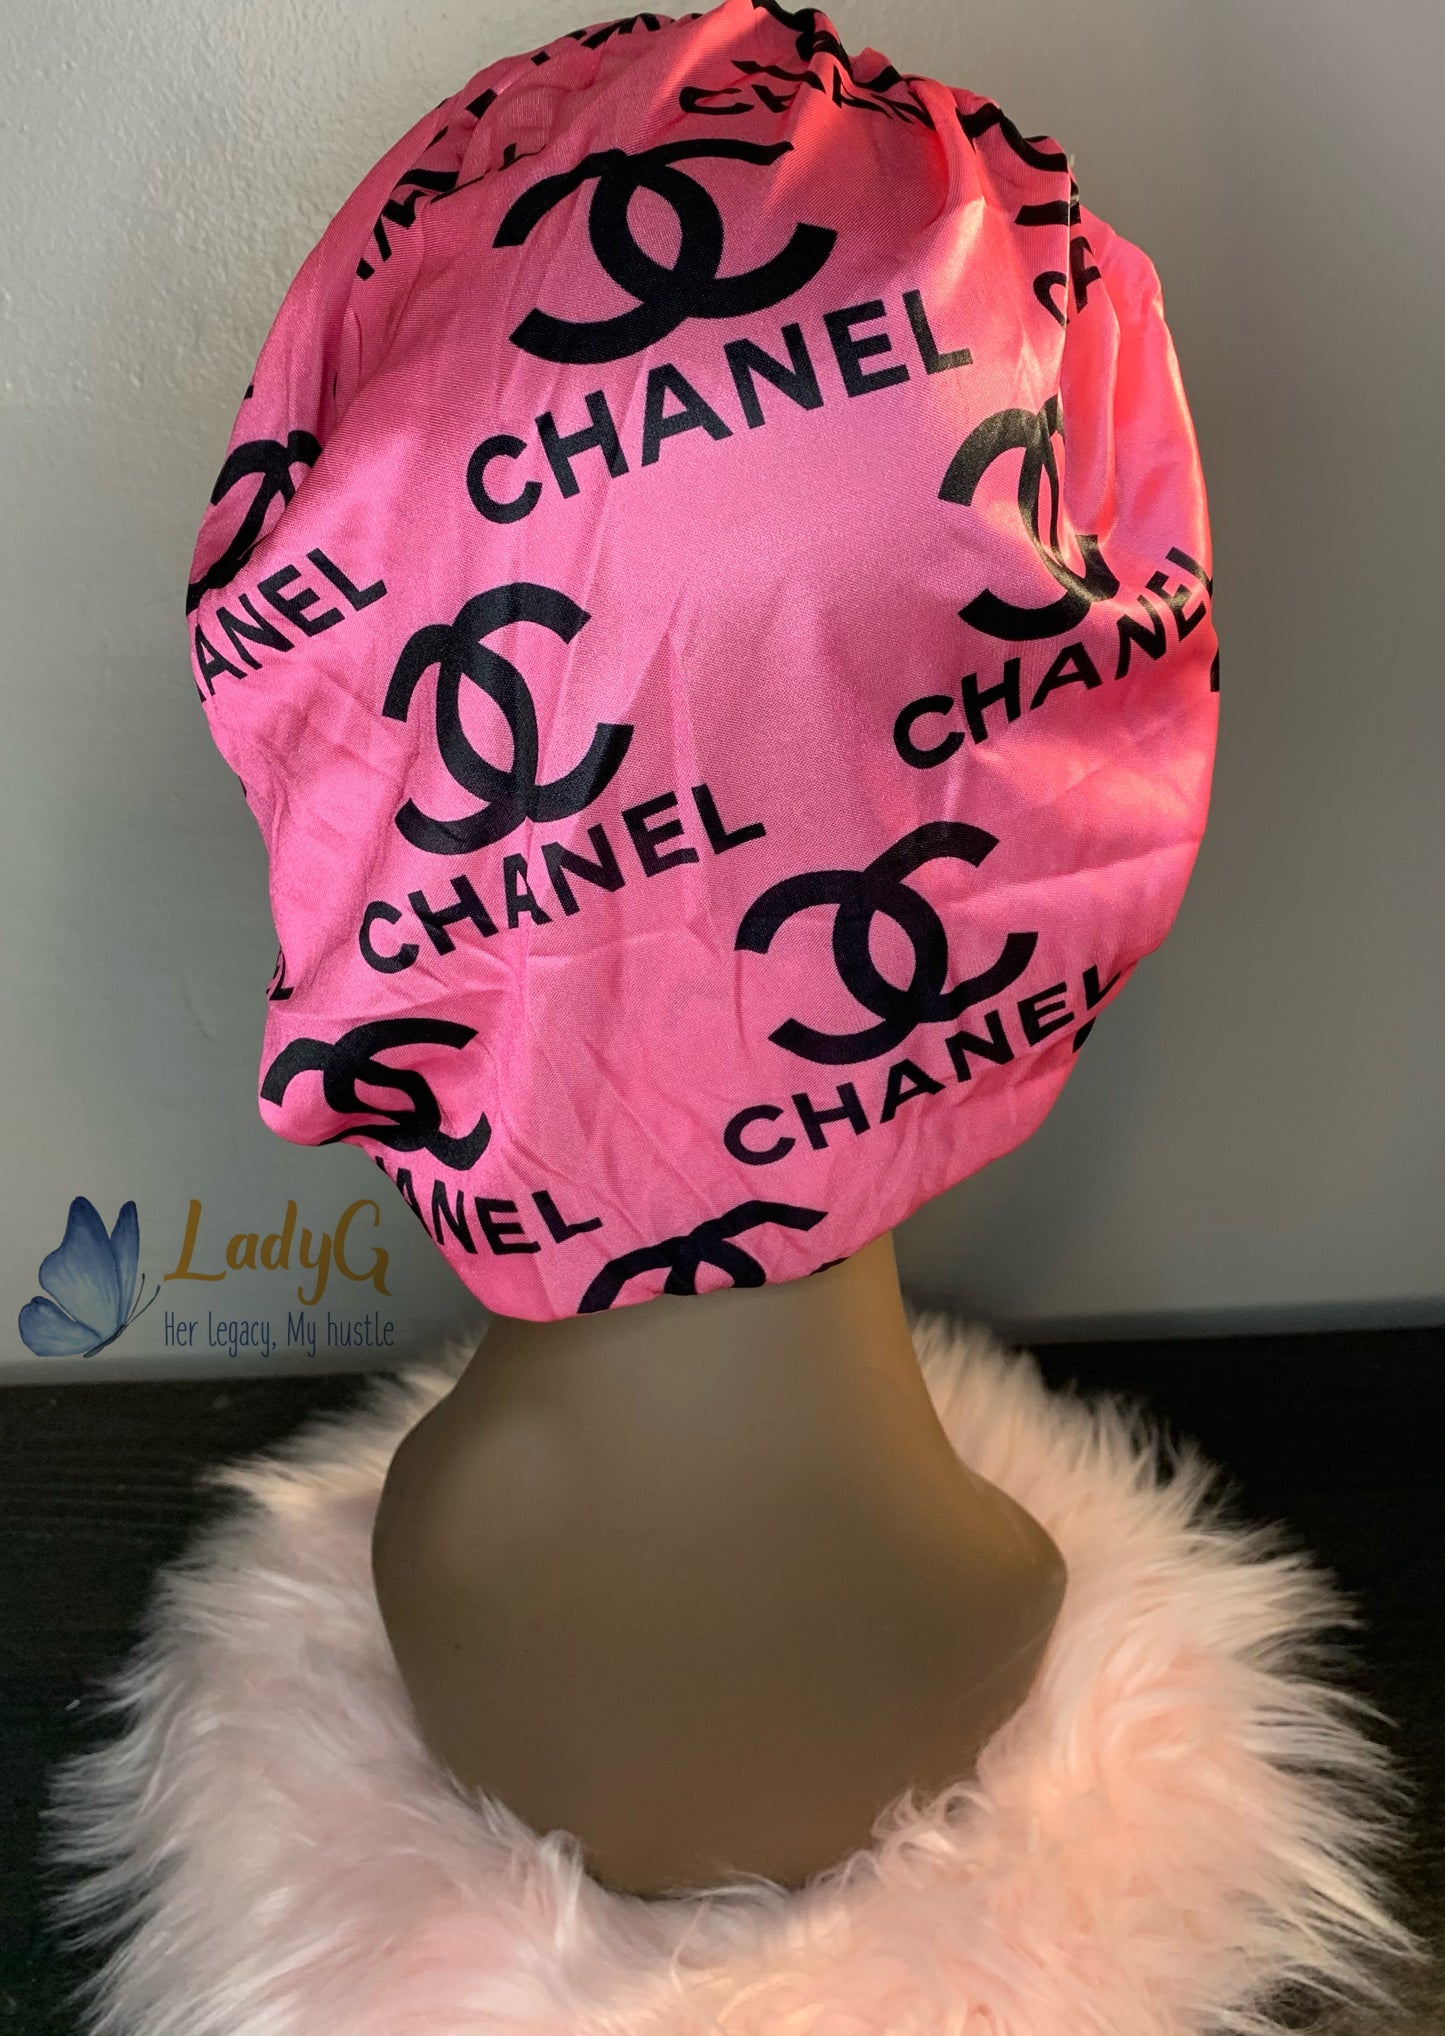 Designer Bonnets for Sale  Silky Black Chanel Bonnet by Wave Pro – WaVePr0